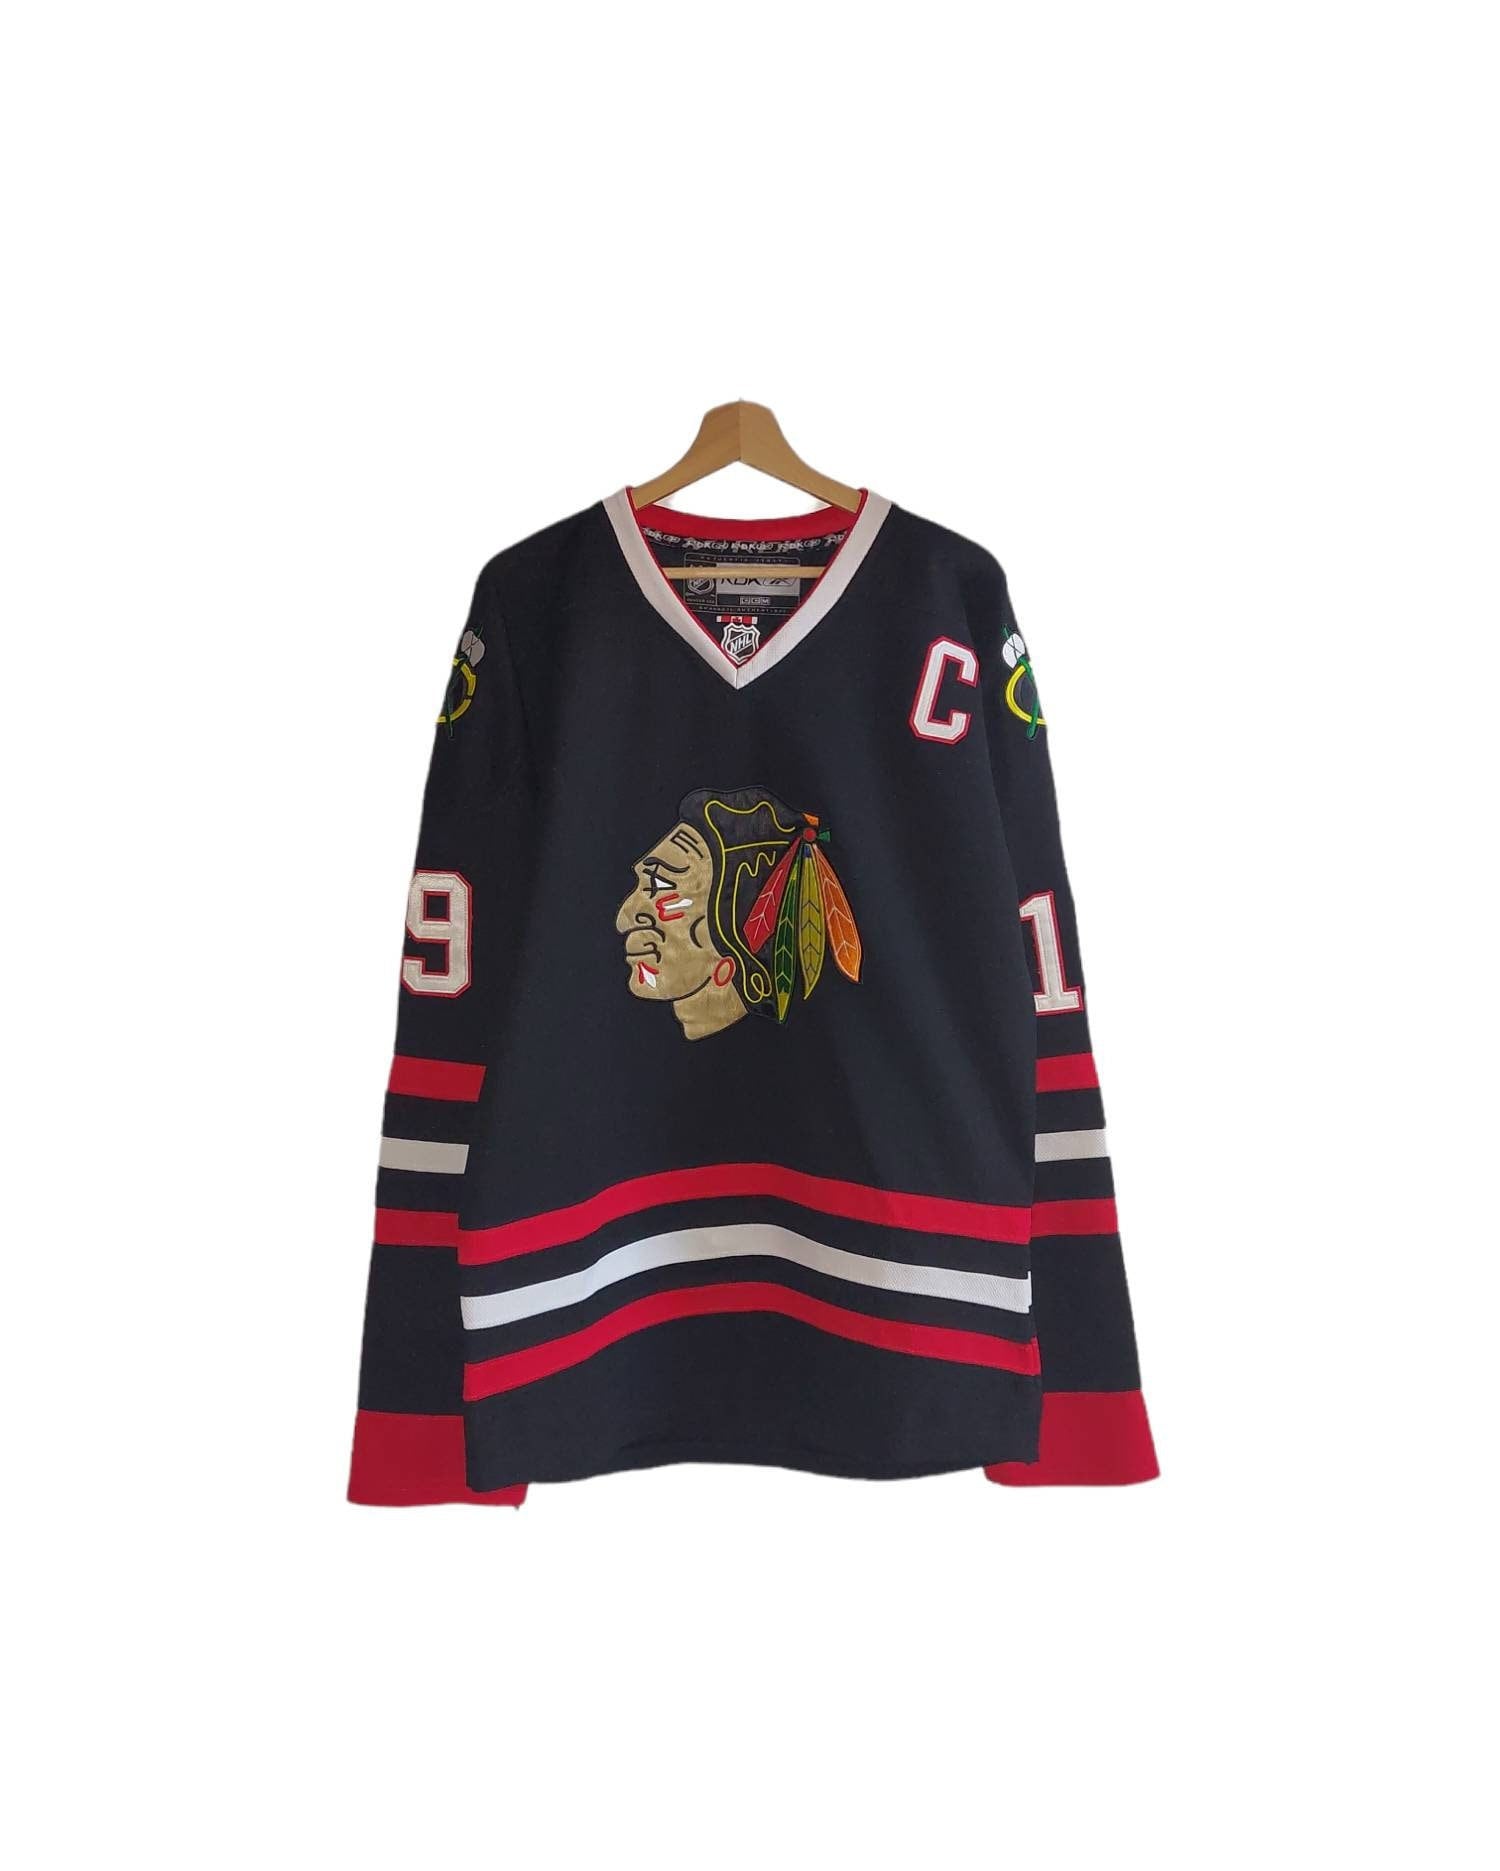 Chicago Blackhawks Authentic Reebok Goalie Hockey Jersey 